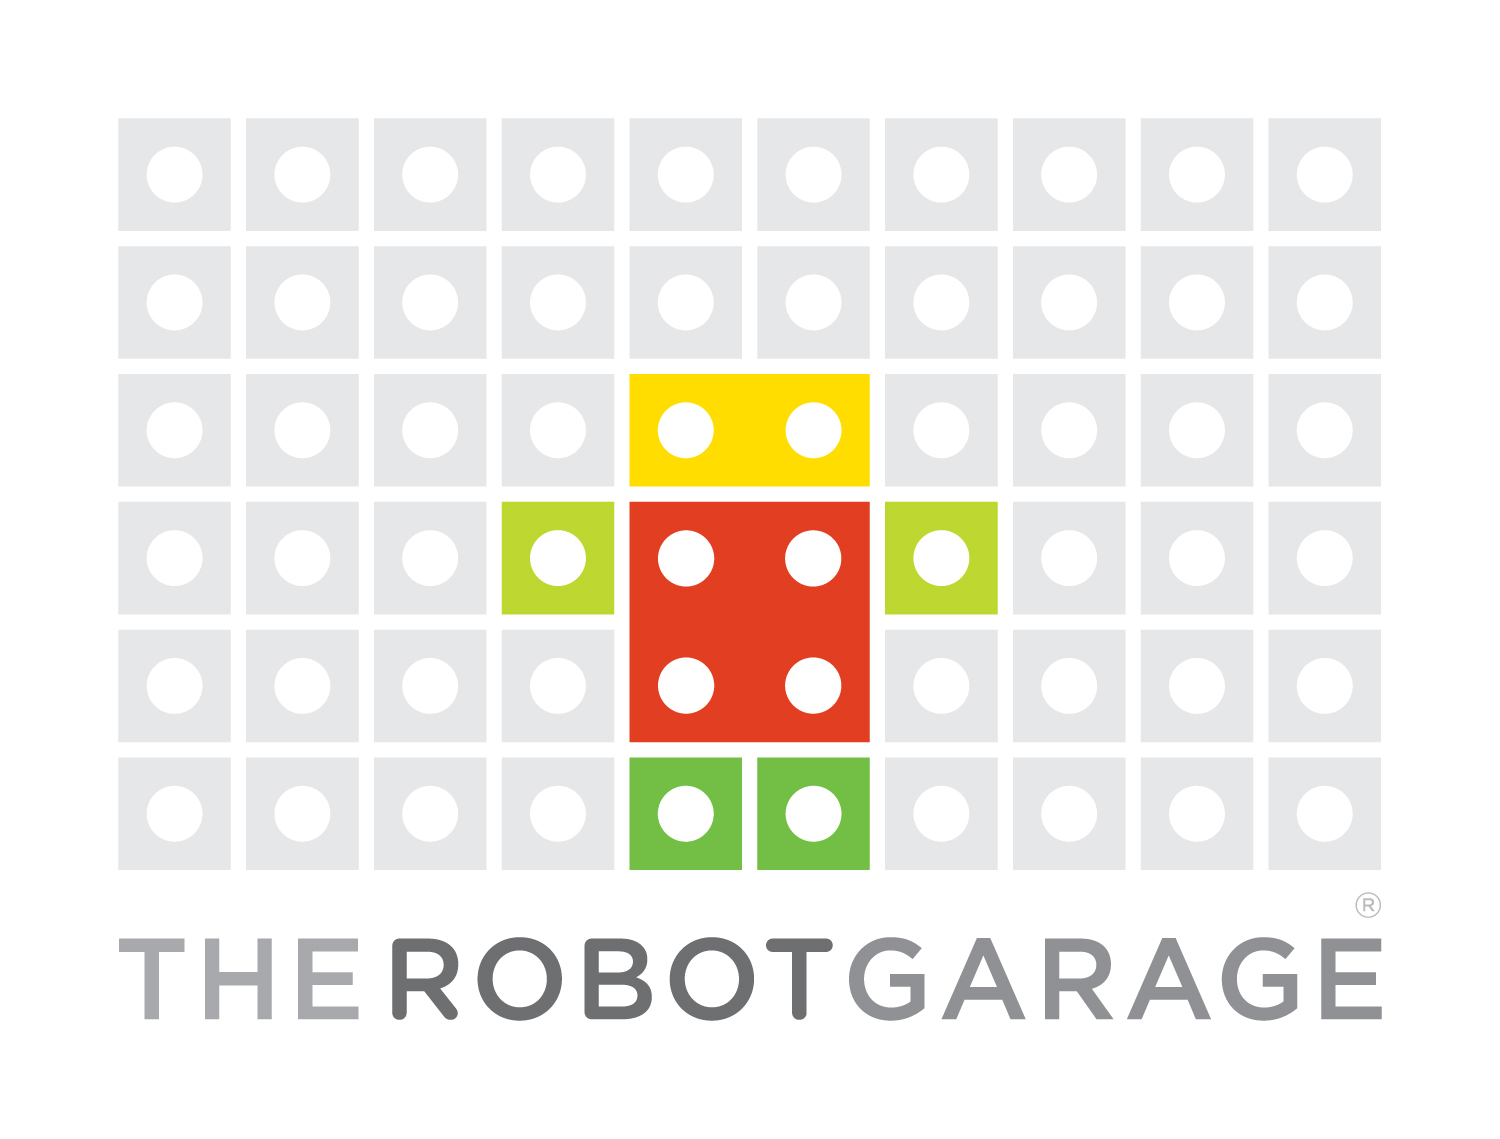 Robot Garage